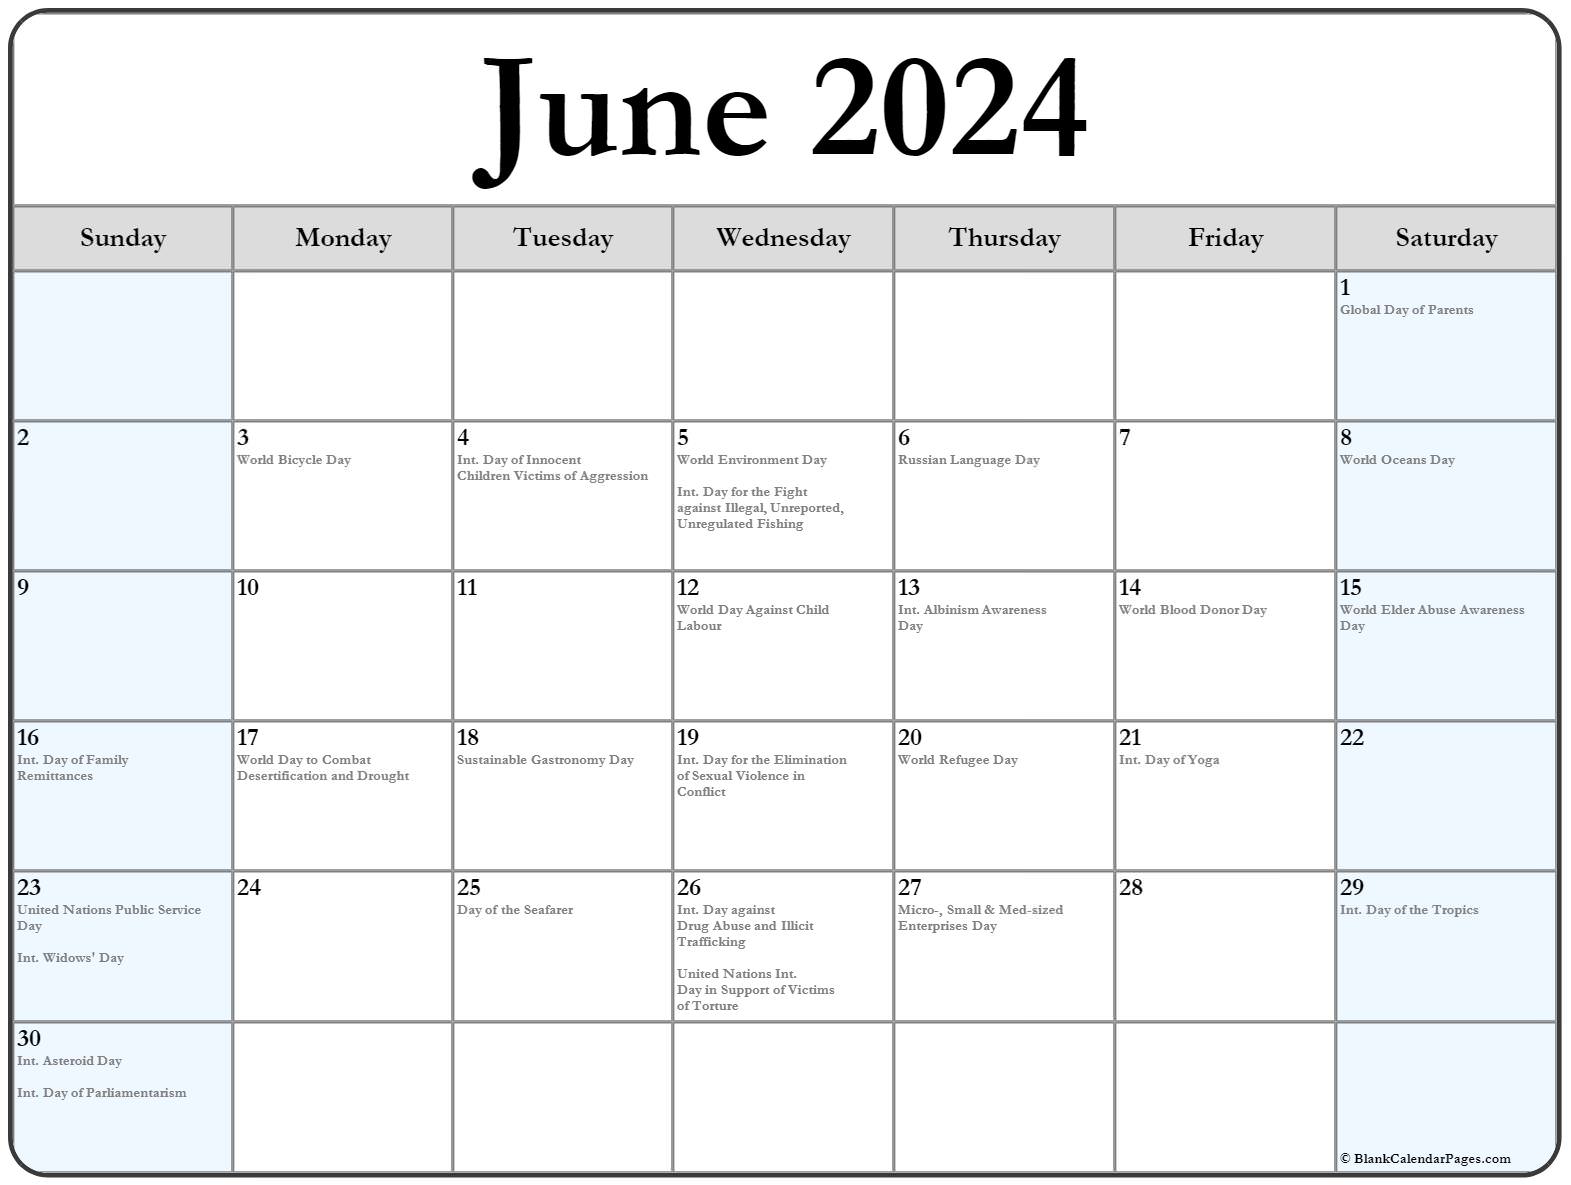 June National Days 2024 - Benny Cecelia